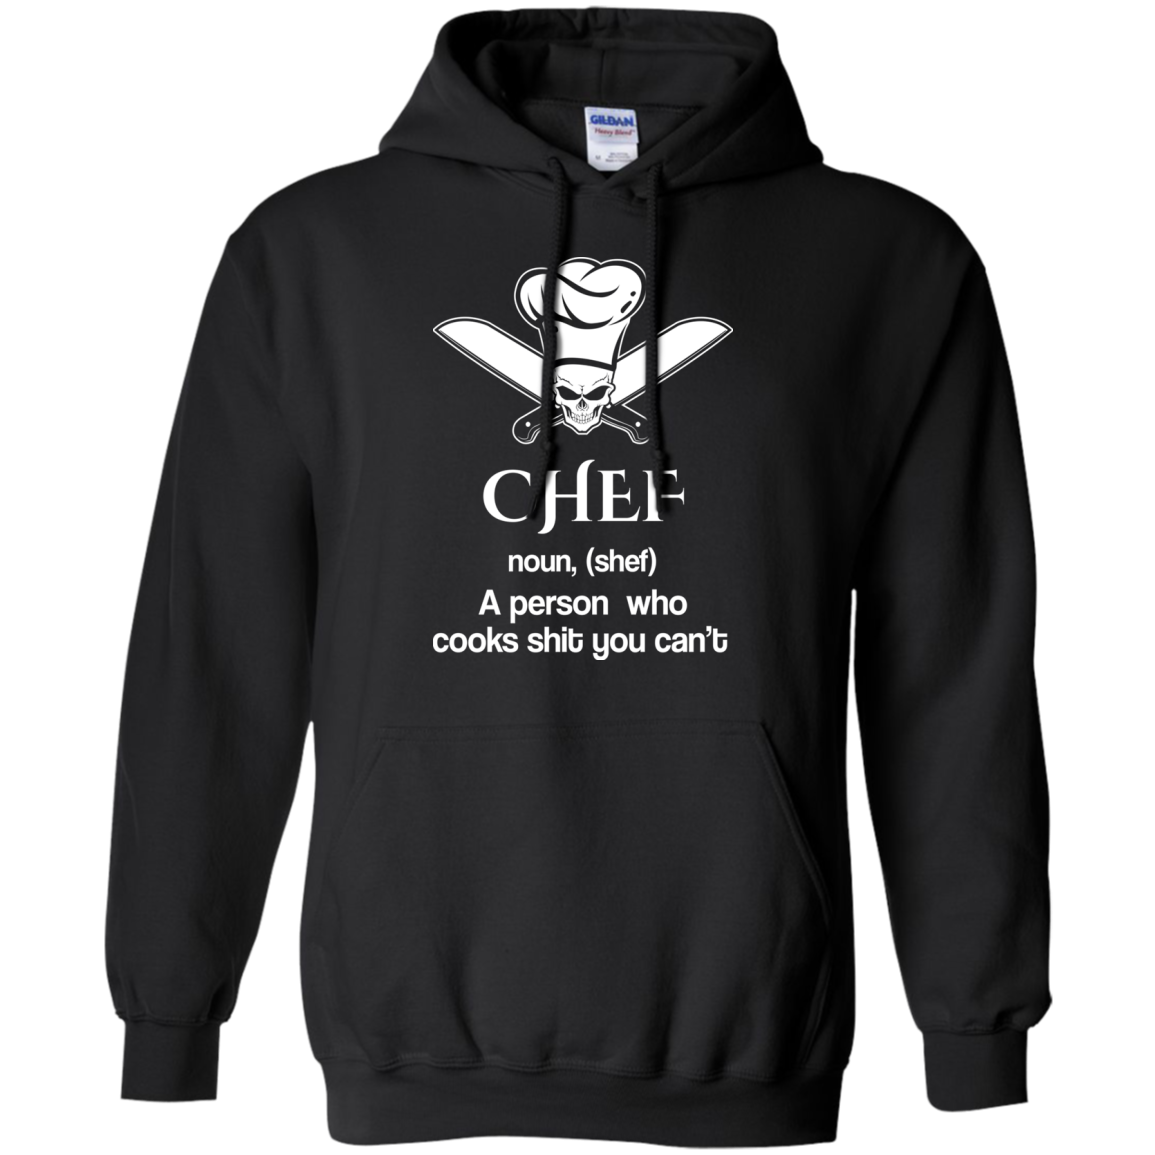 CHEF noun, (shef) shirt/hoodies - ifrogtees